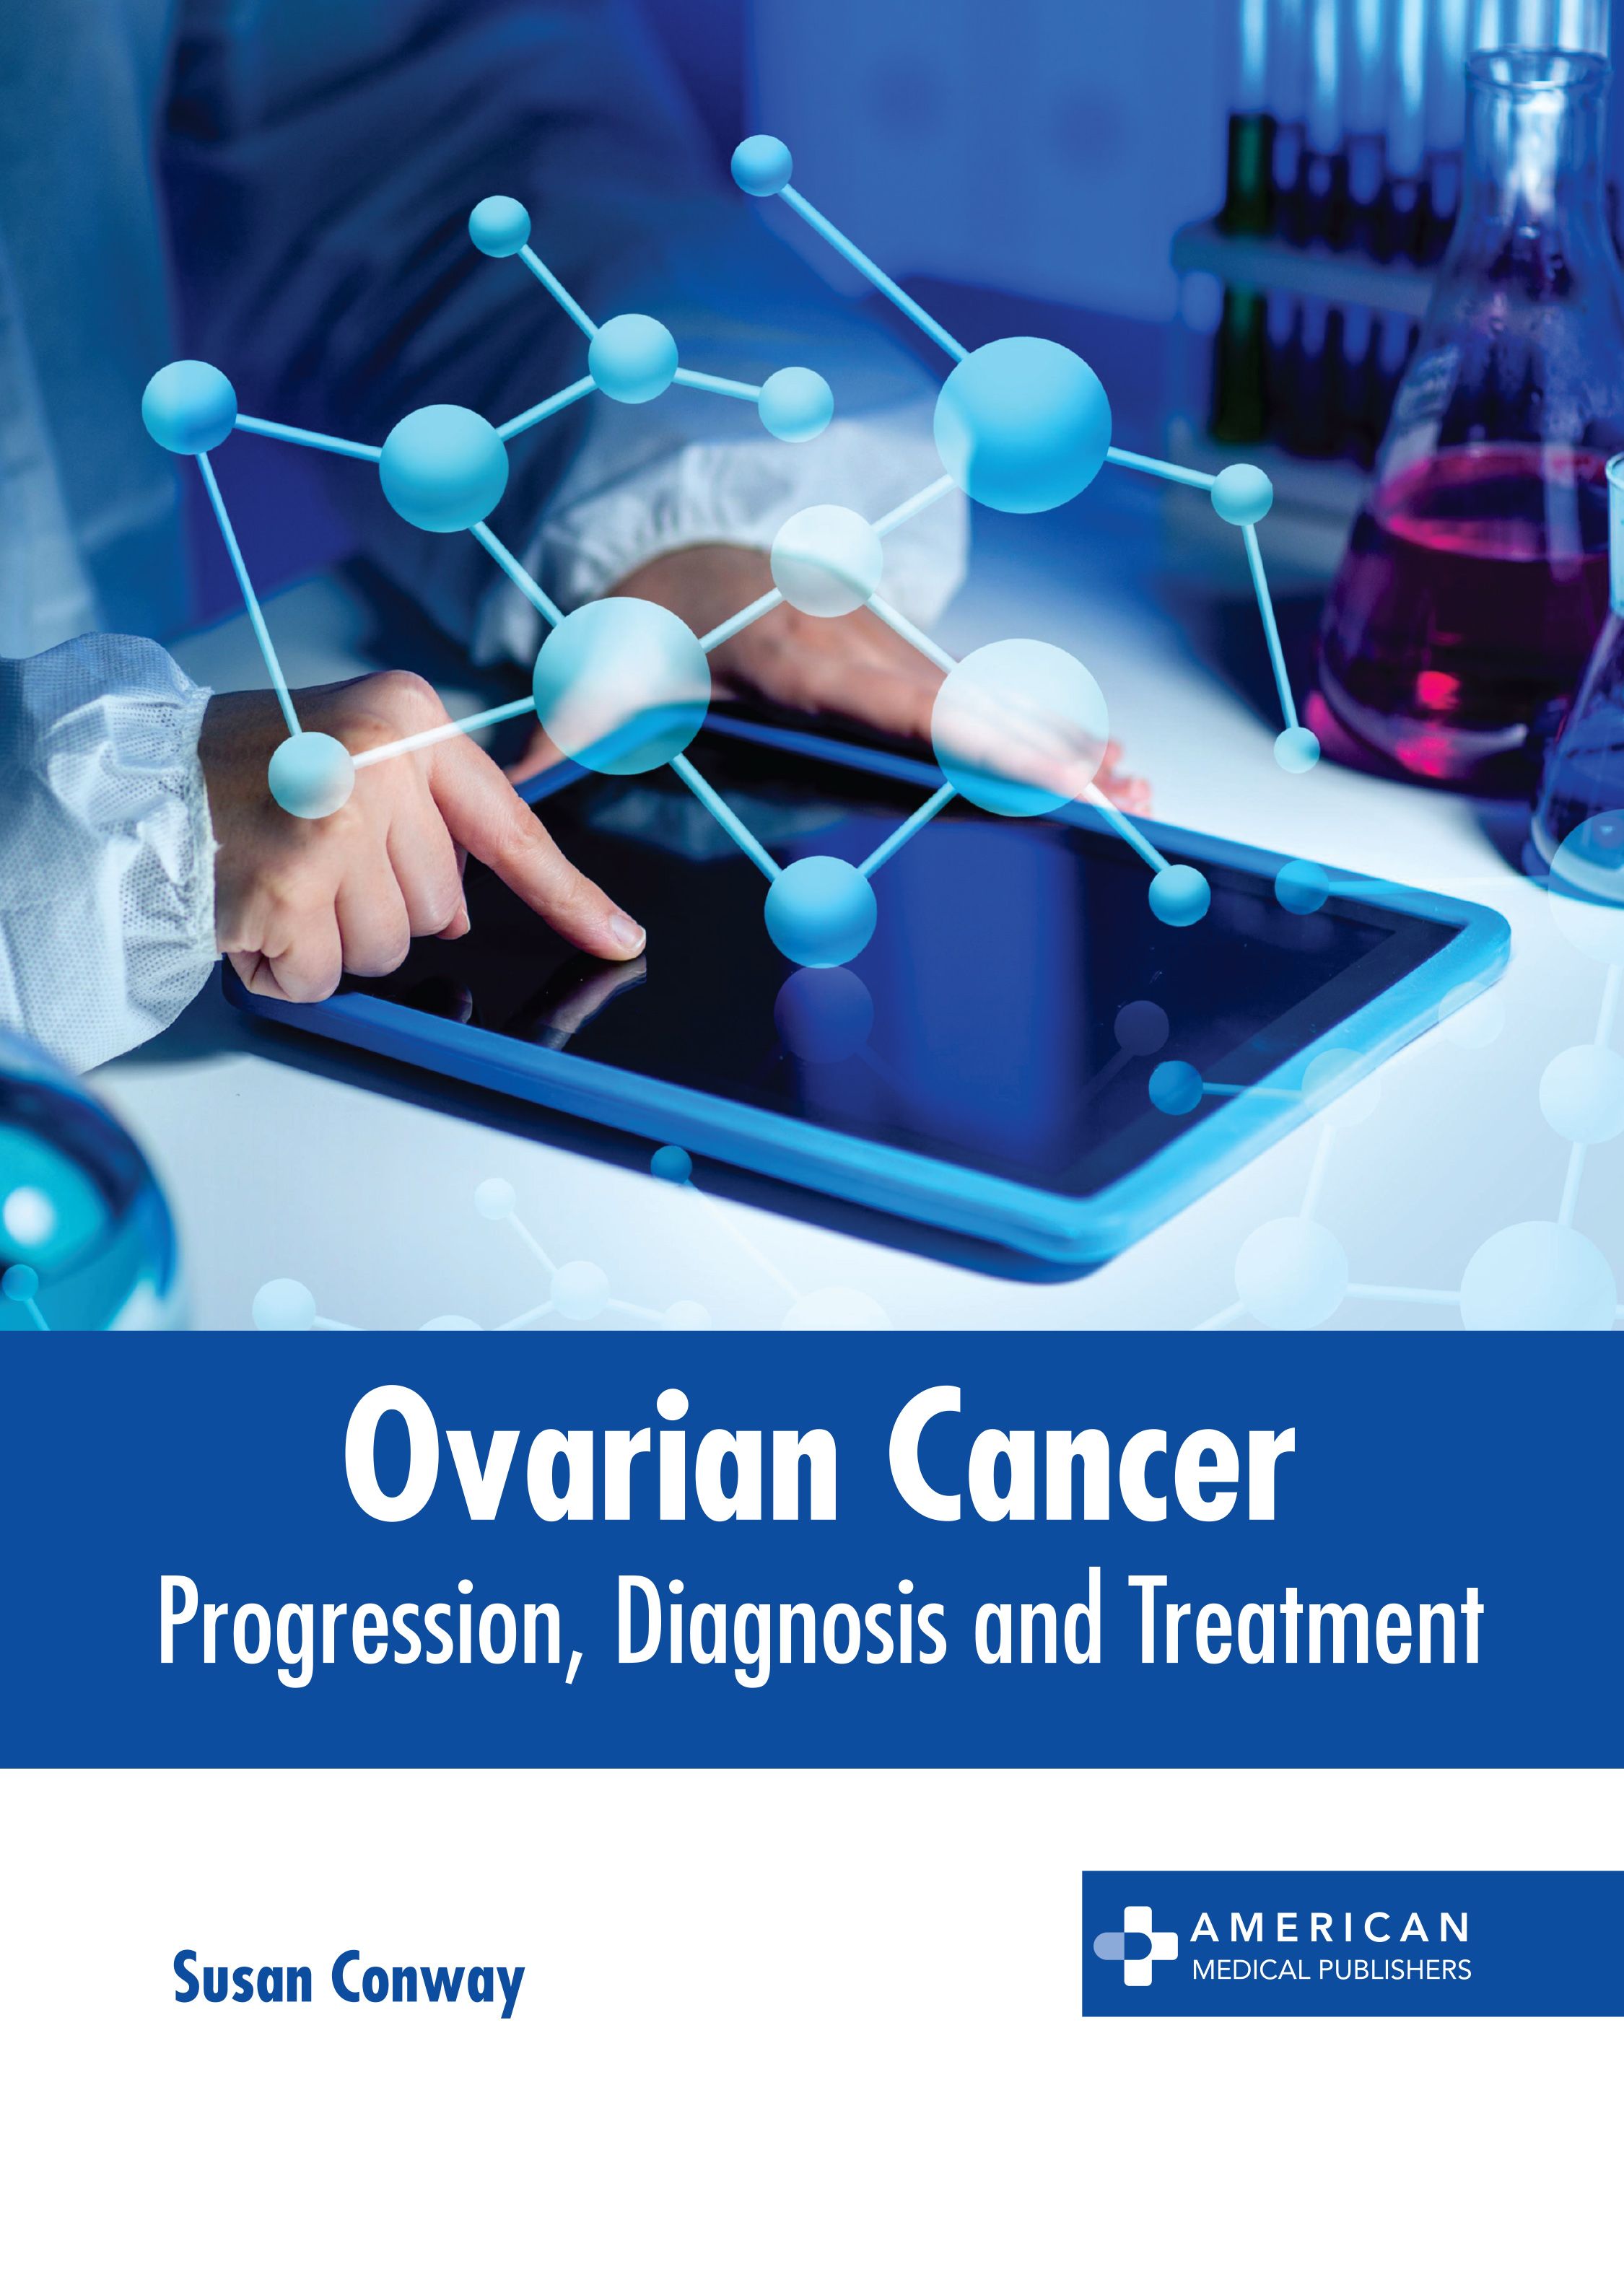 OVARIAN CANCER: PROGRESSION, DIAGNOSIS AND TREATMENT